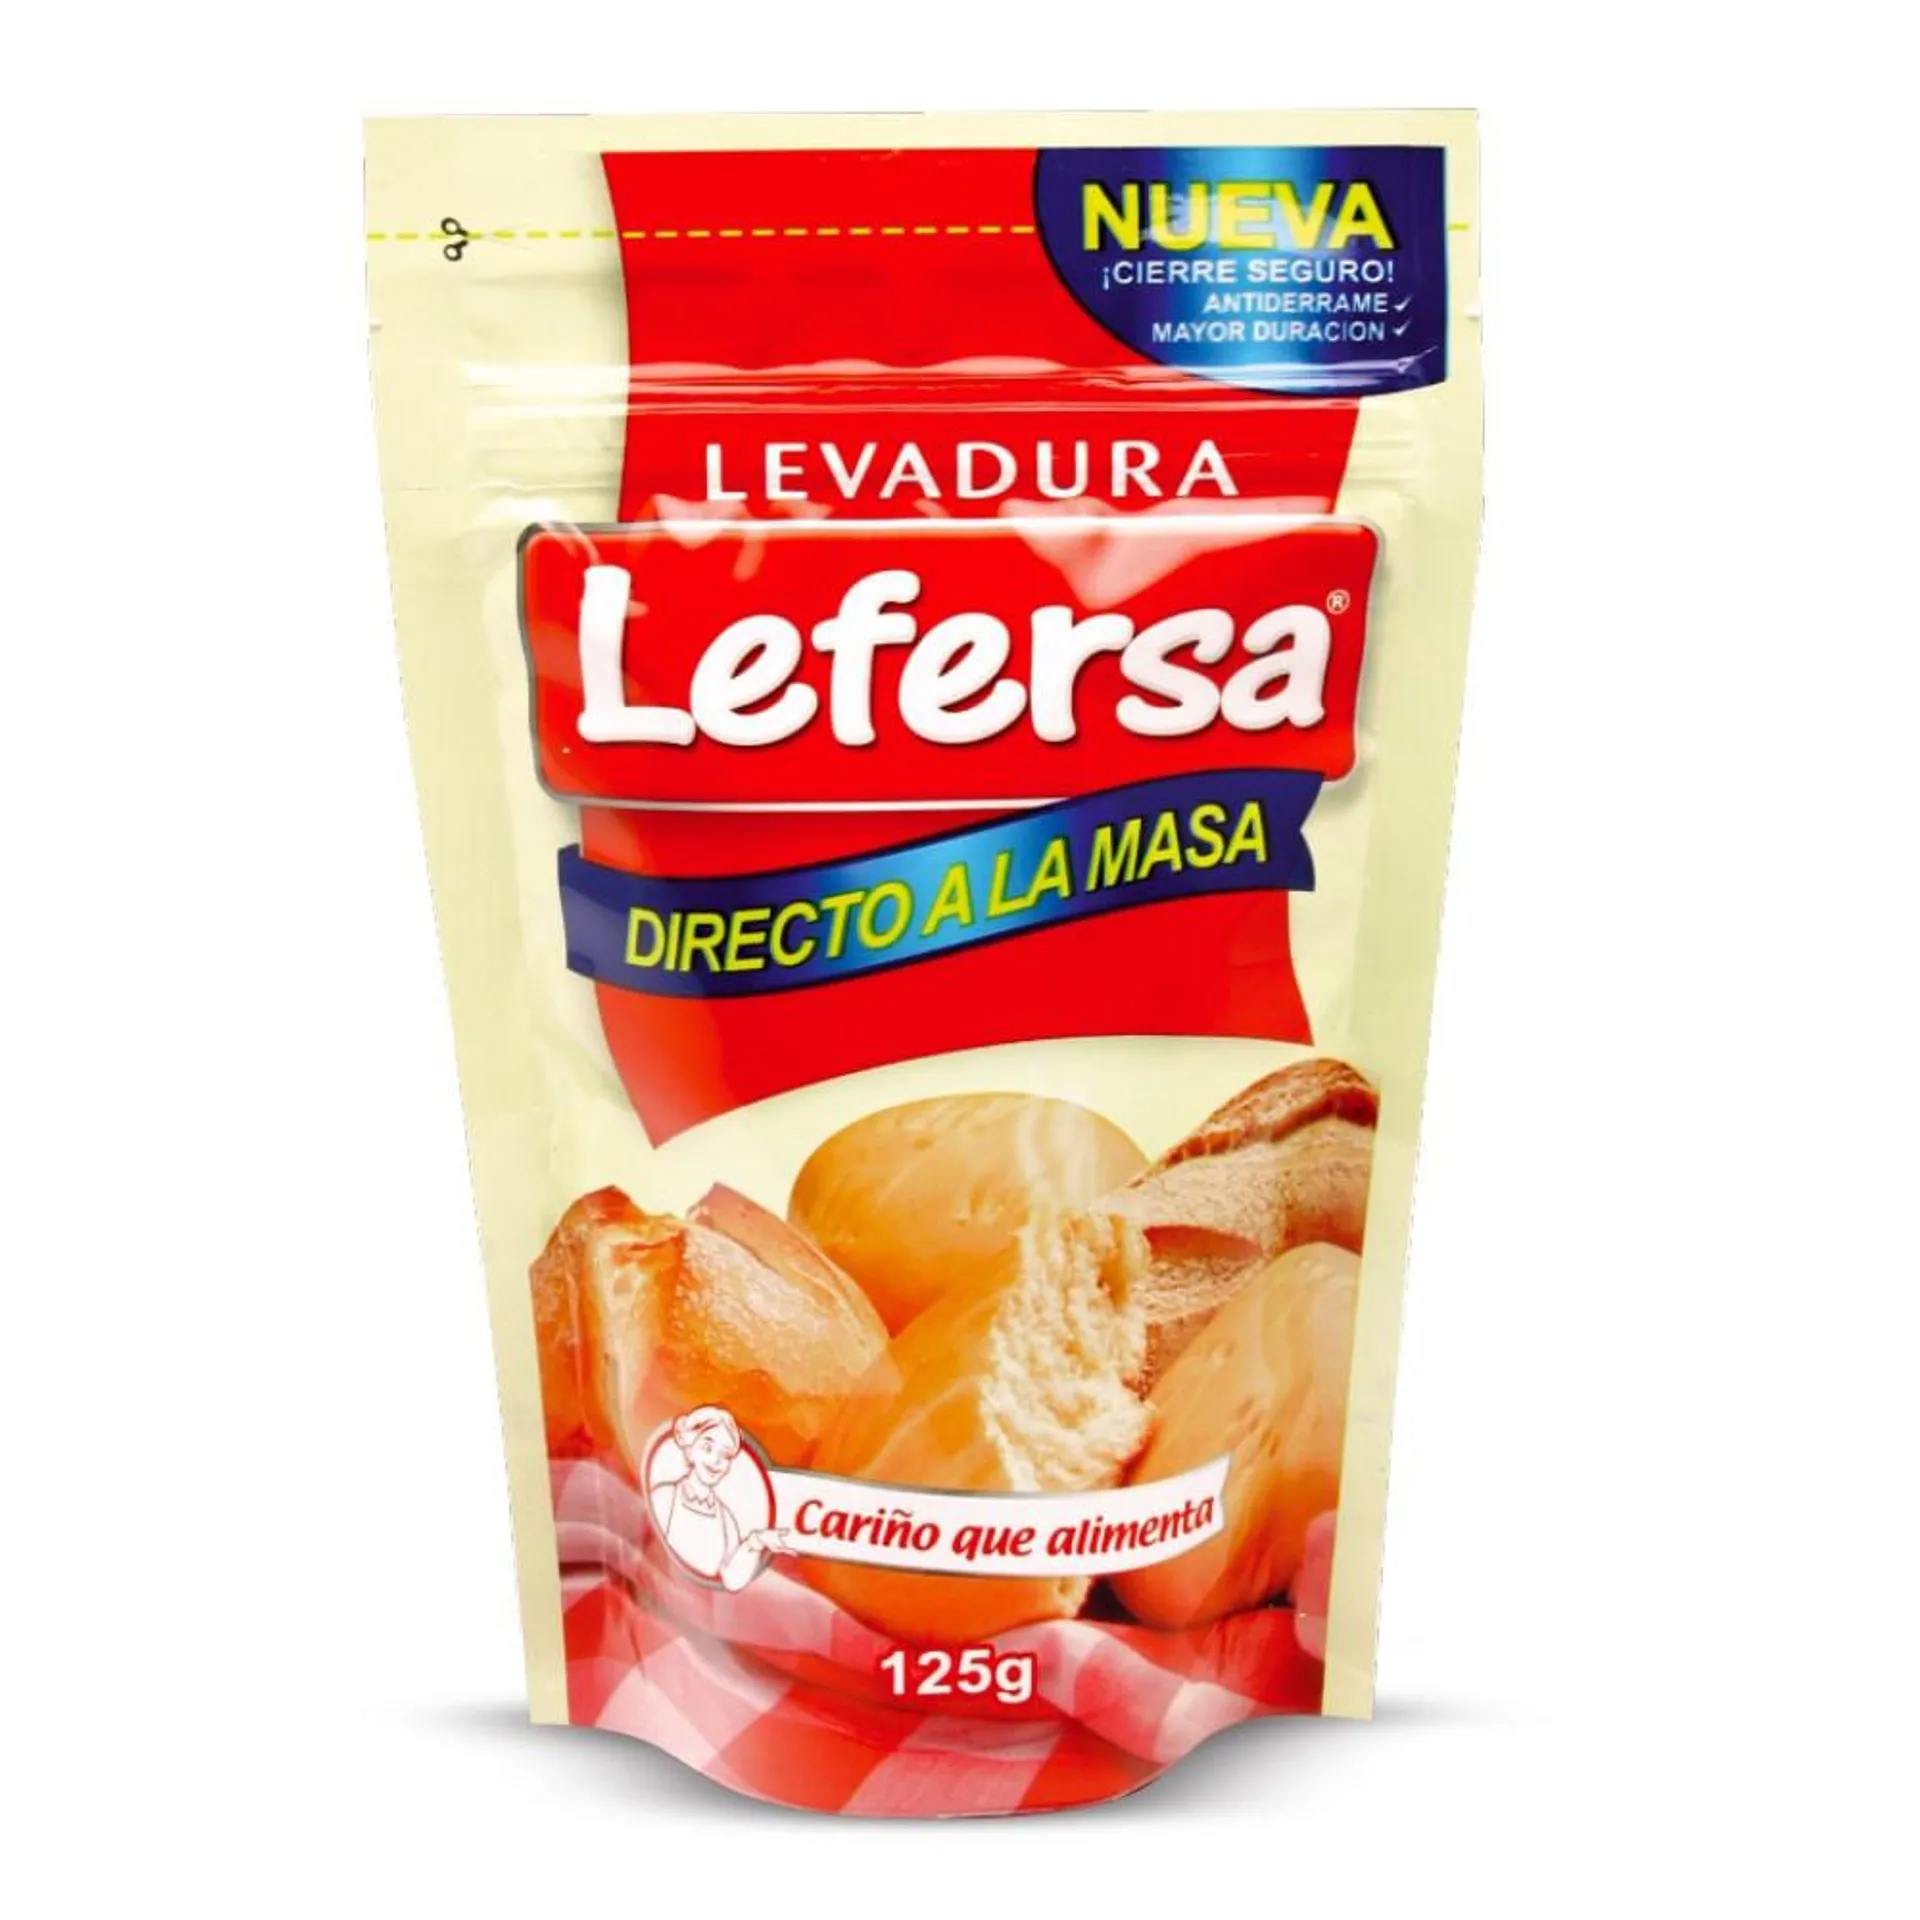 Levadura Lefersa doy pack 125 g